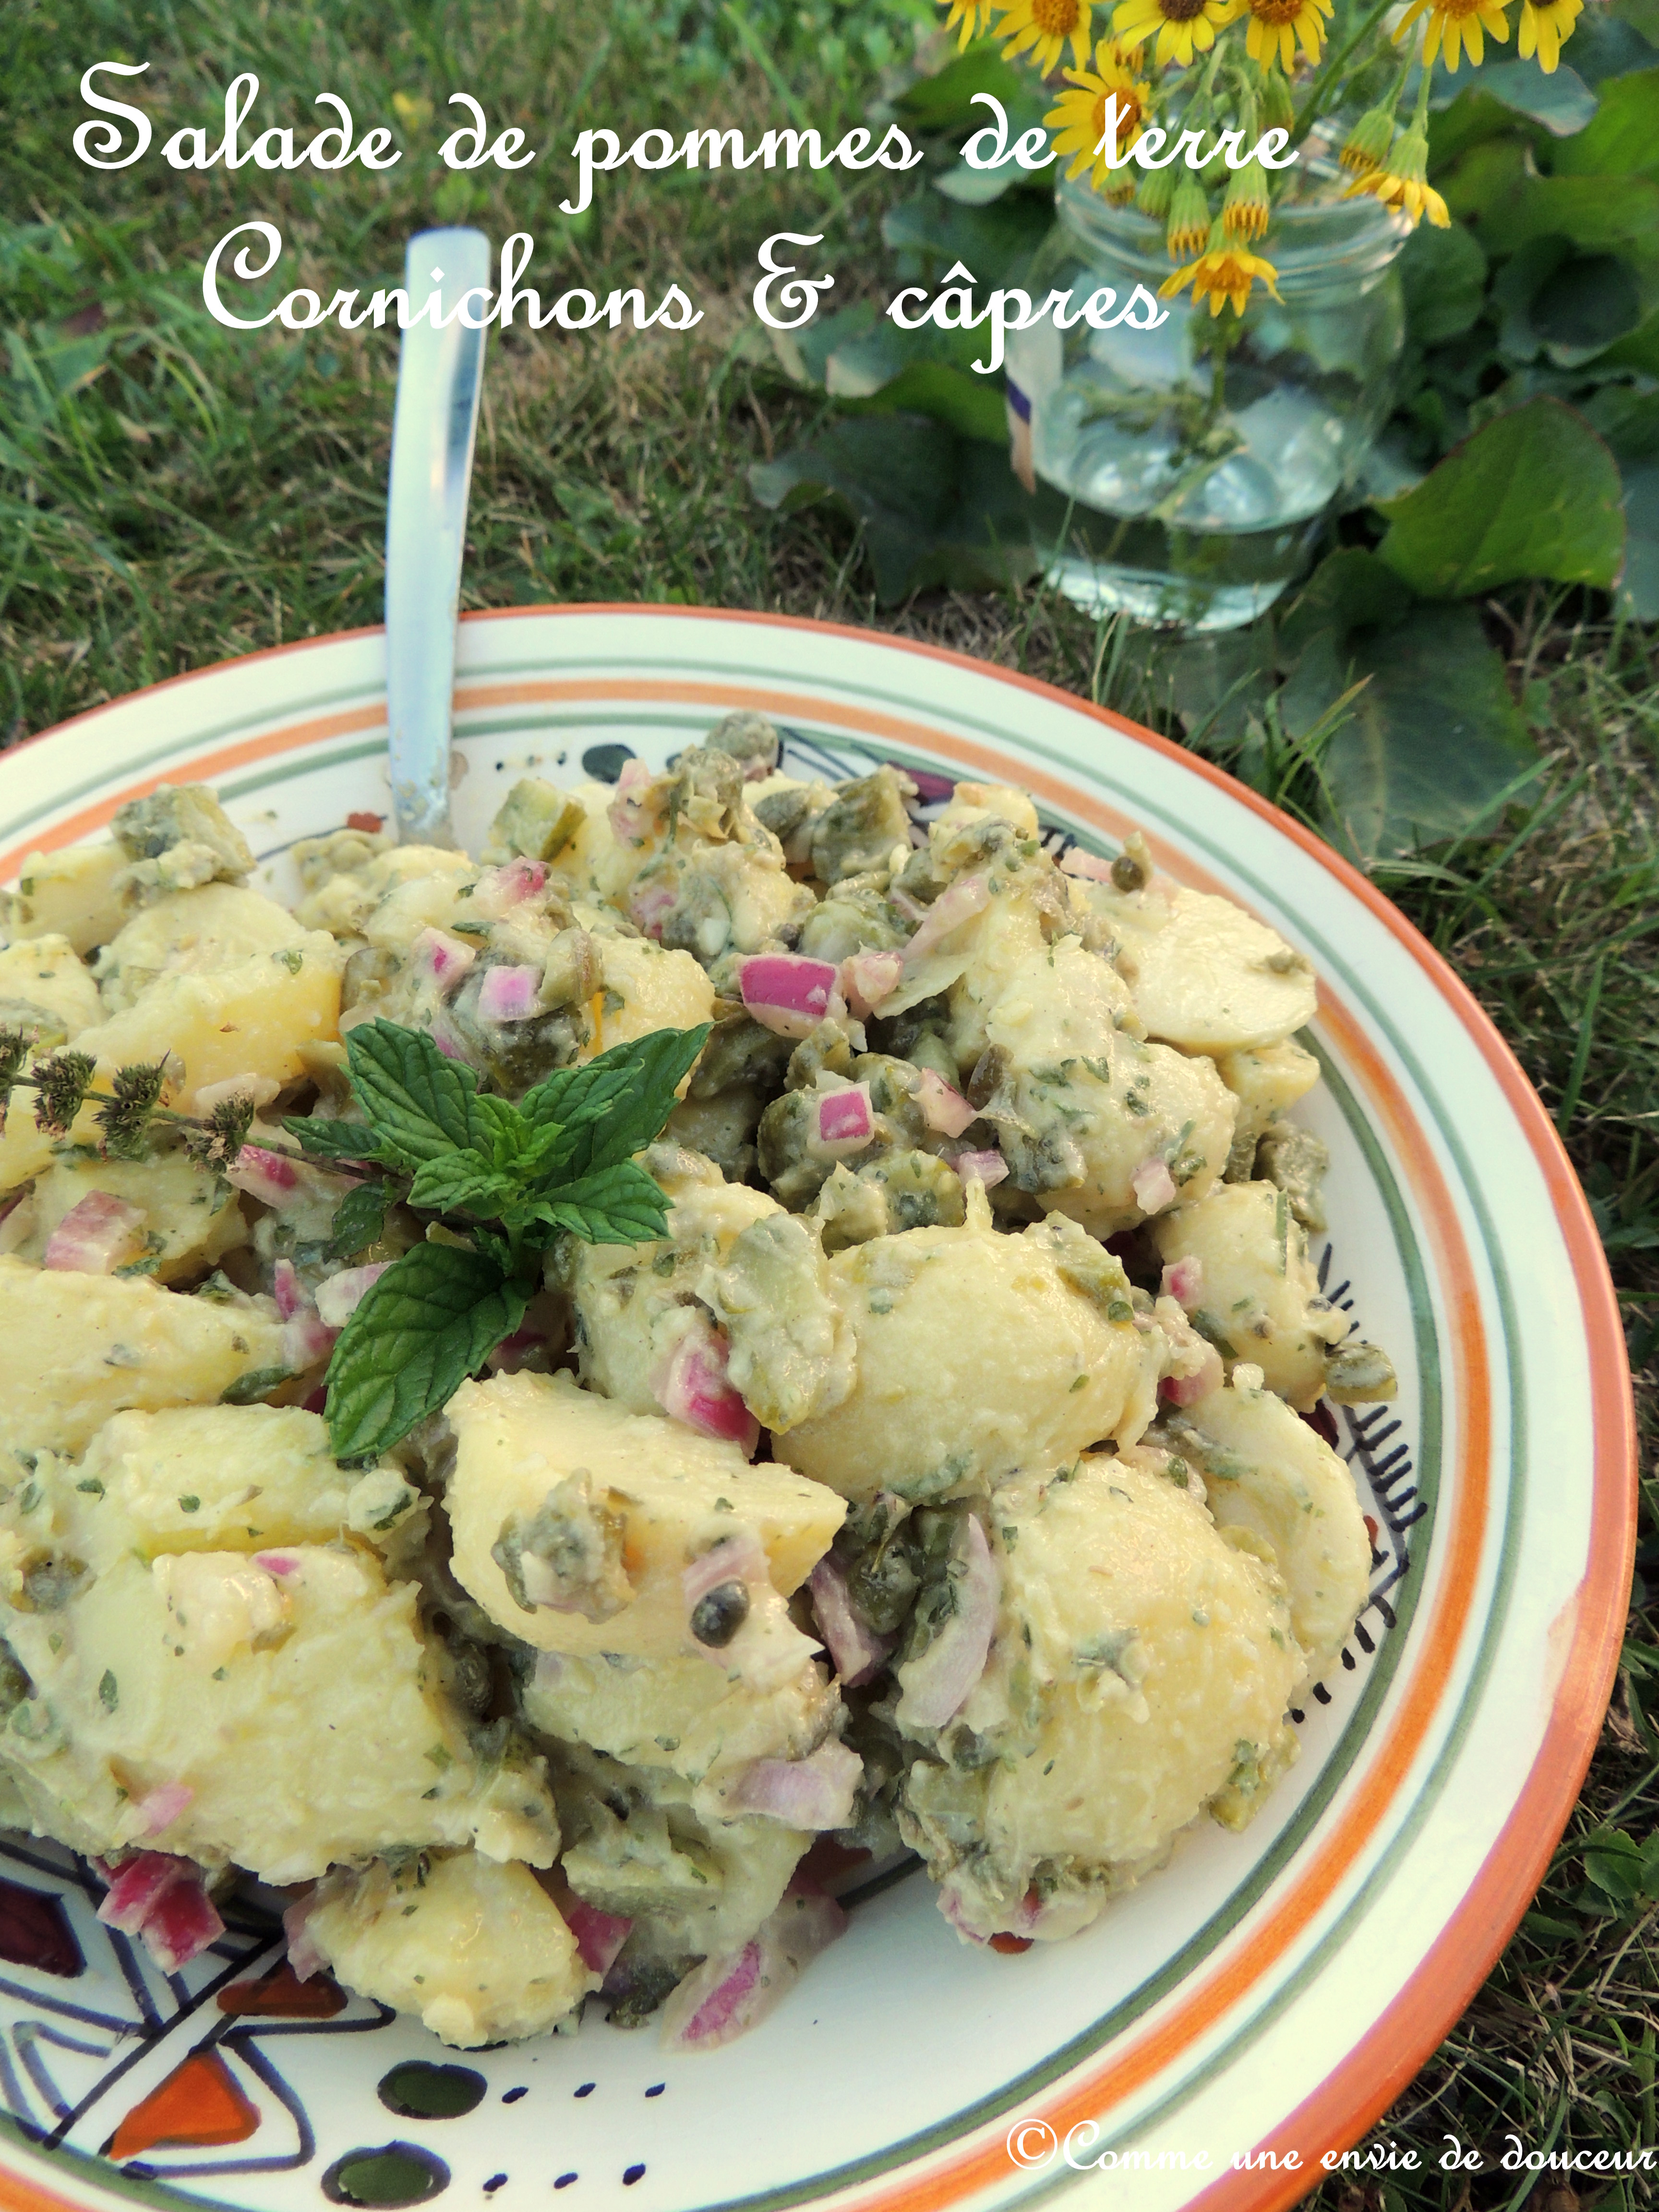 Salade de pommes de terre câpres & cornichons – Capers & gherkins potato salad